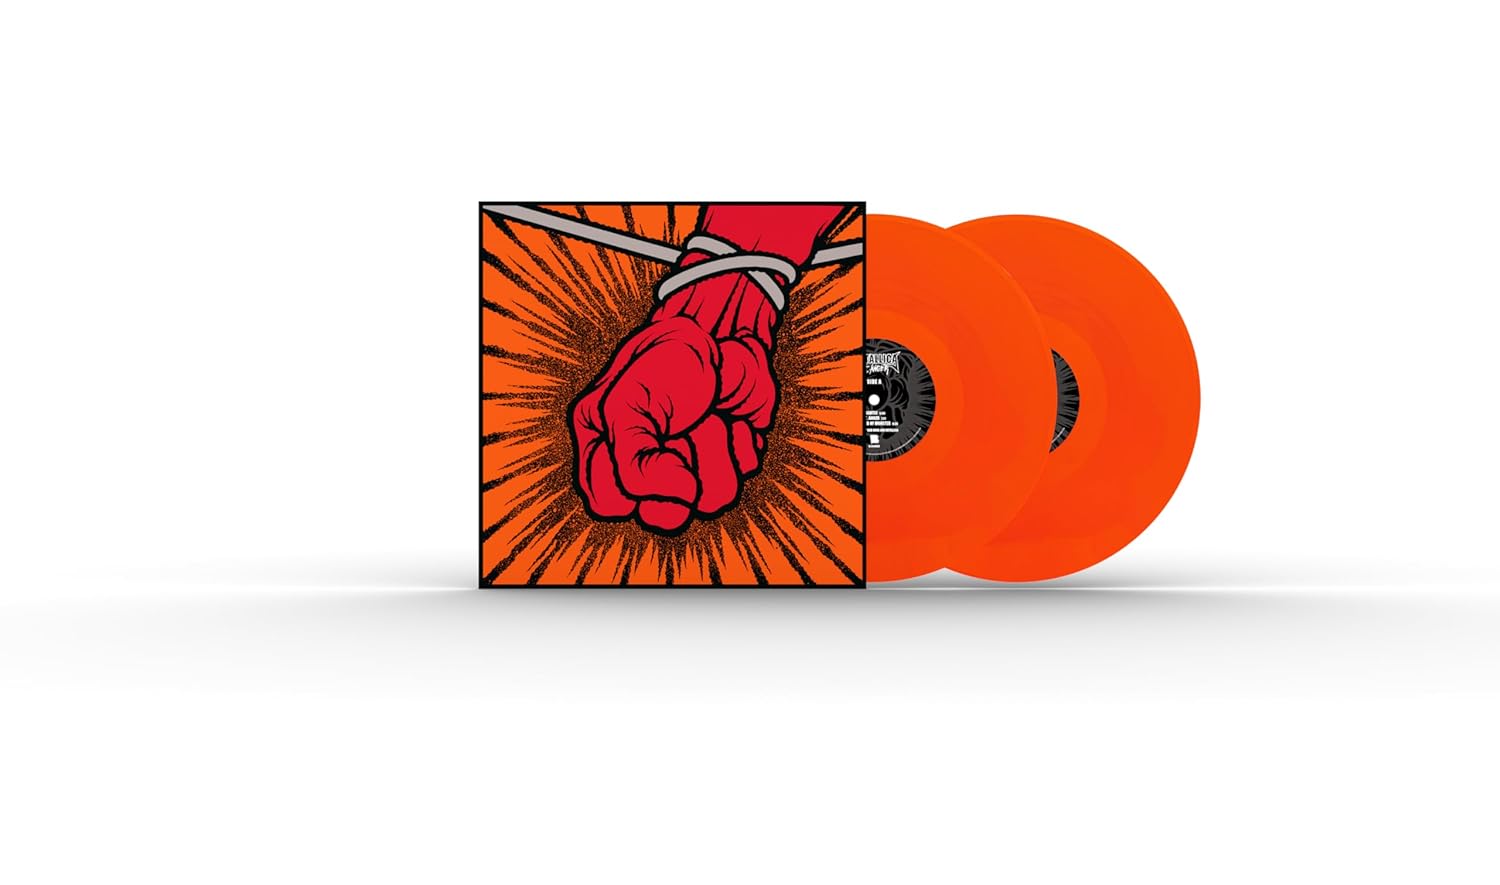 METALLICA – ST. ANGER orange vinyl LP2